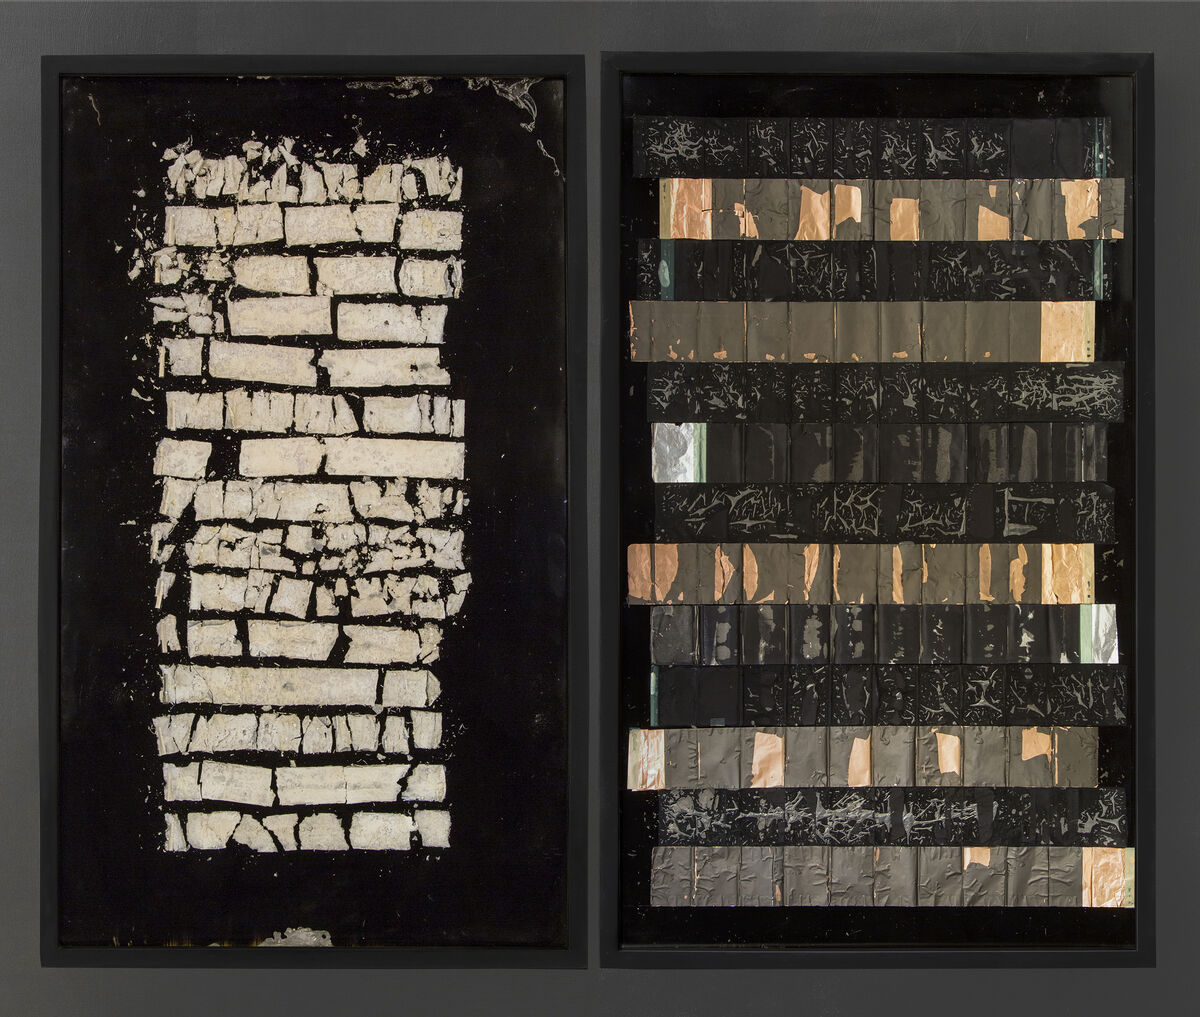 Alejandra Preito, Li-Ion., 2017; Lithium, copper, aluminum, iron, plastic, wood, resin, 200 x 120 x 6 cm. Courtesy of Gallery Die Ecke.